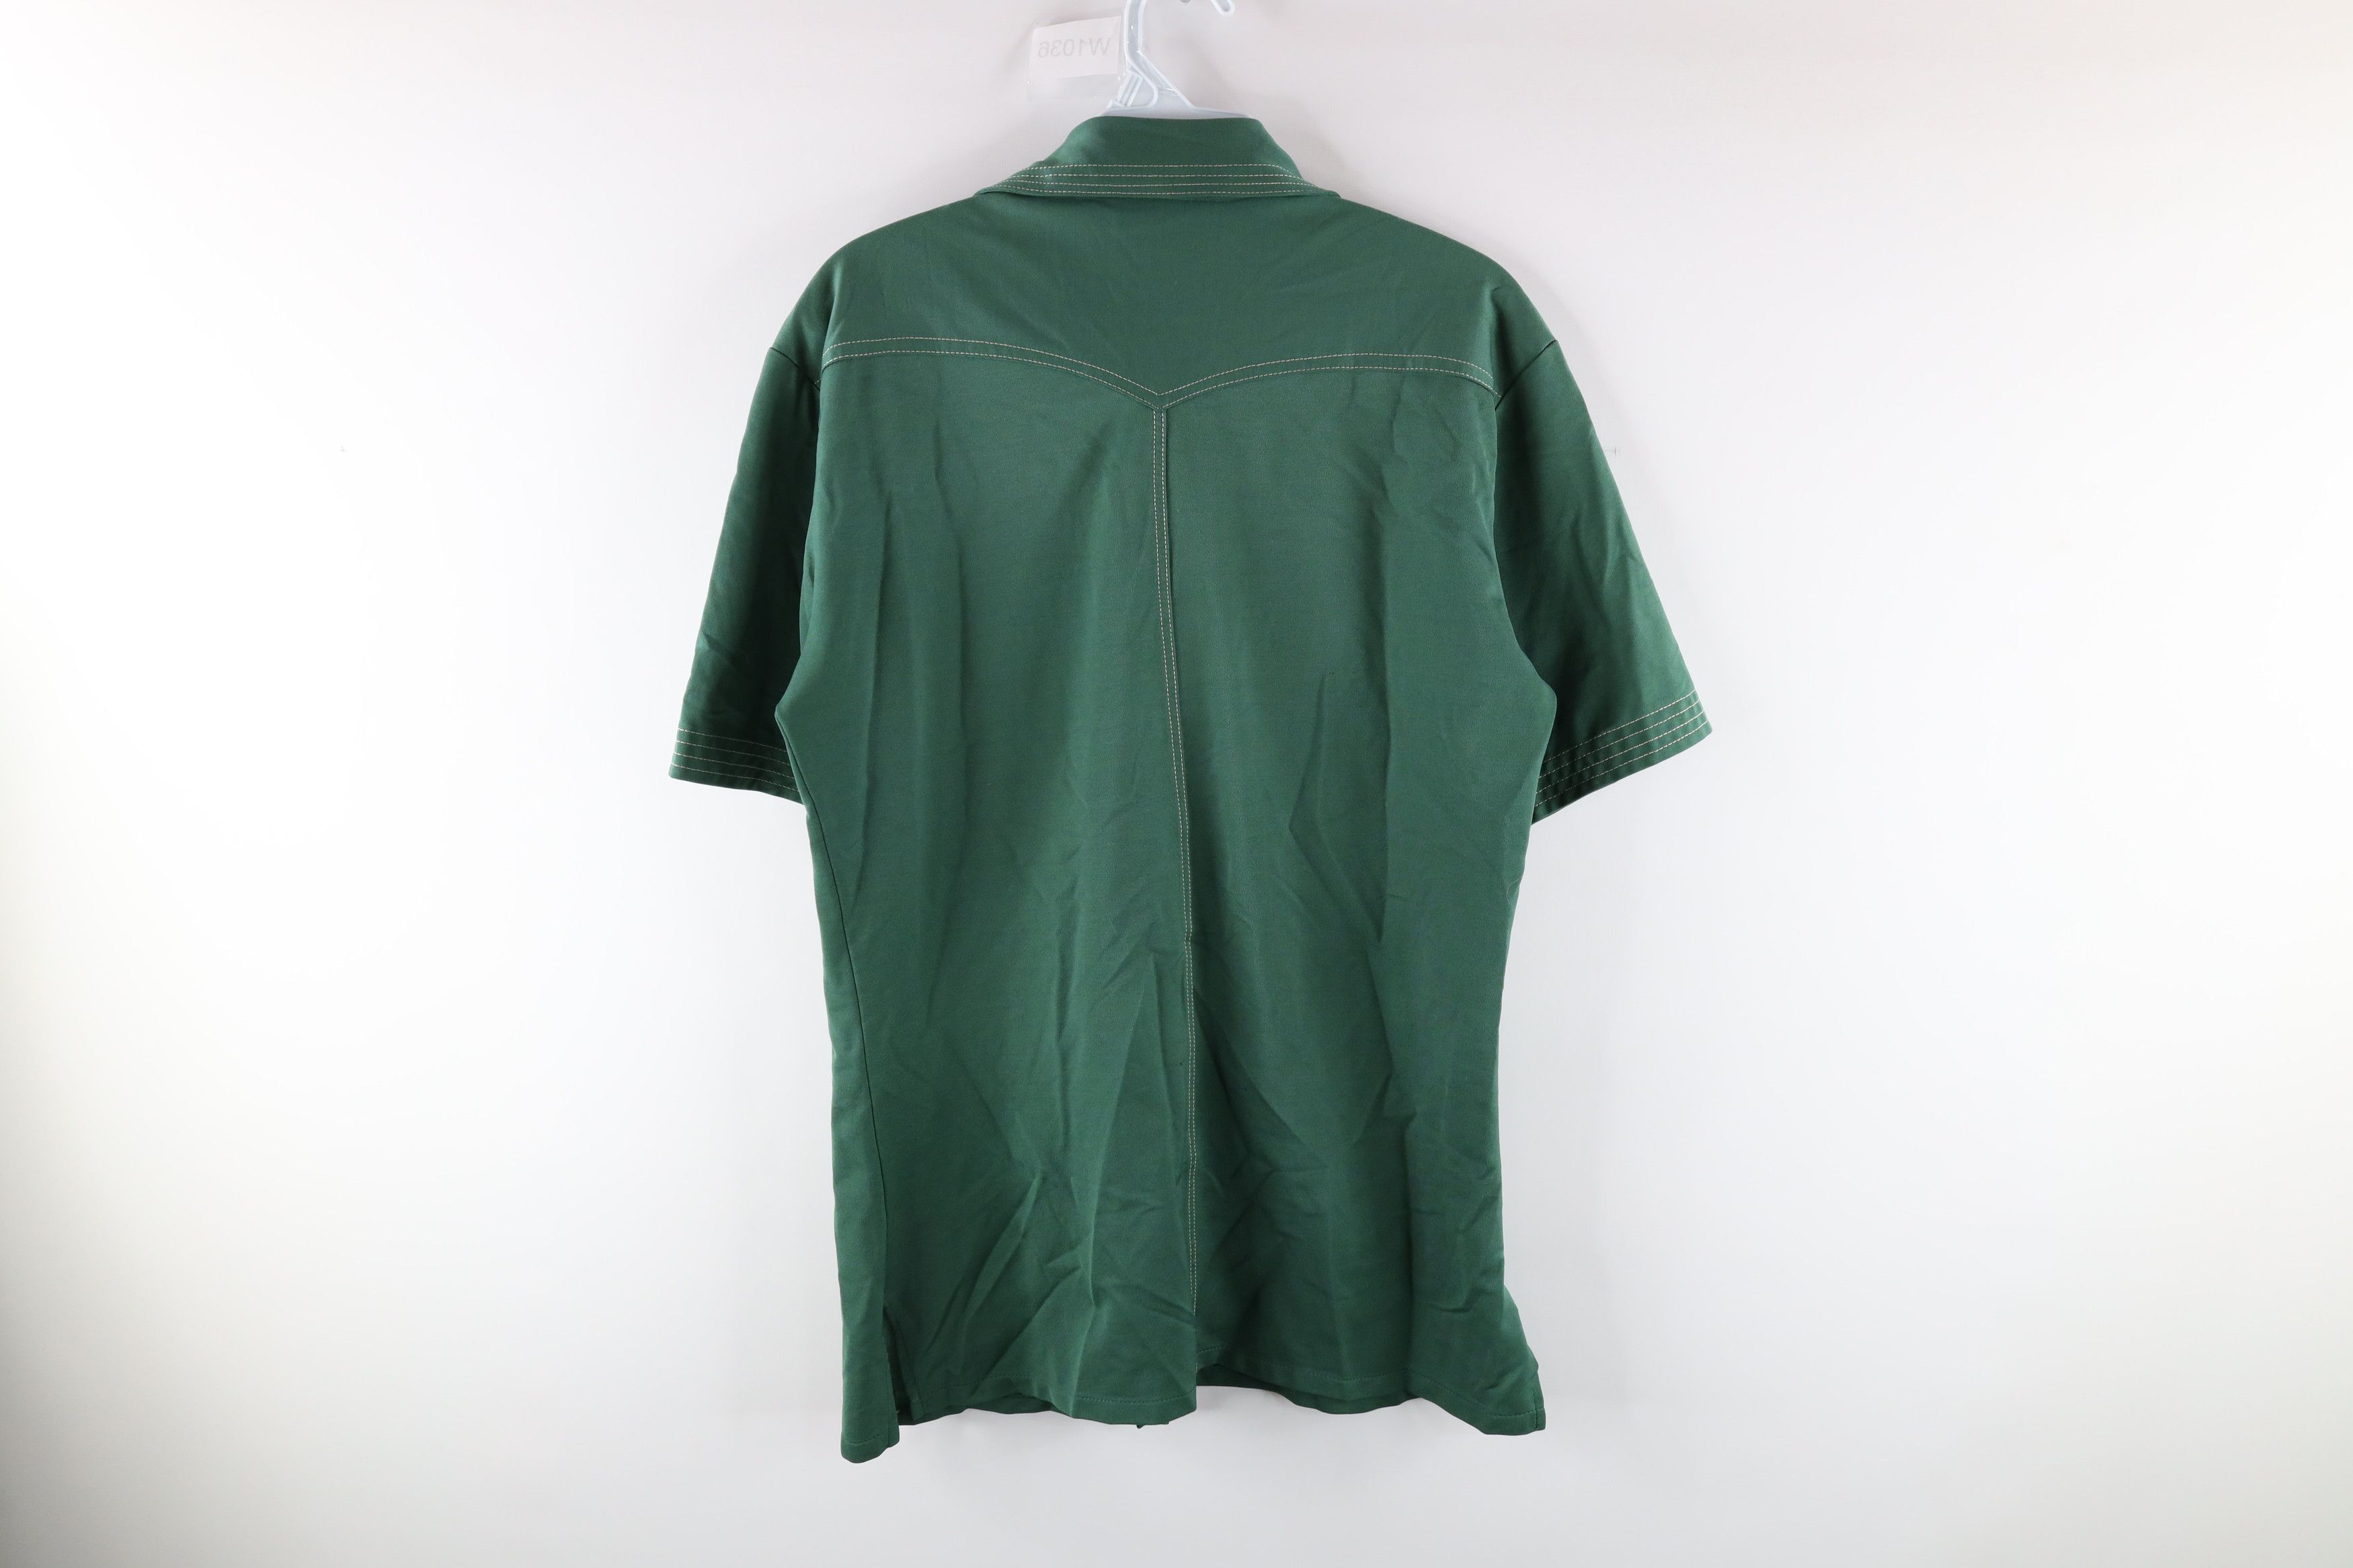 Vintage Vintage 60s Rockabilly Knit Collared Button Shirt Green Size US M / EU 48-50 / 2 - 5 Thumbnail